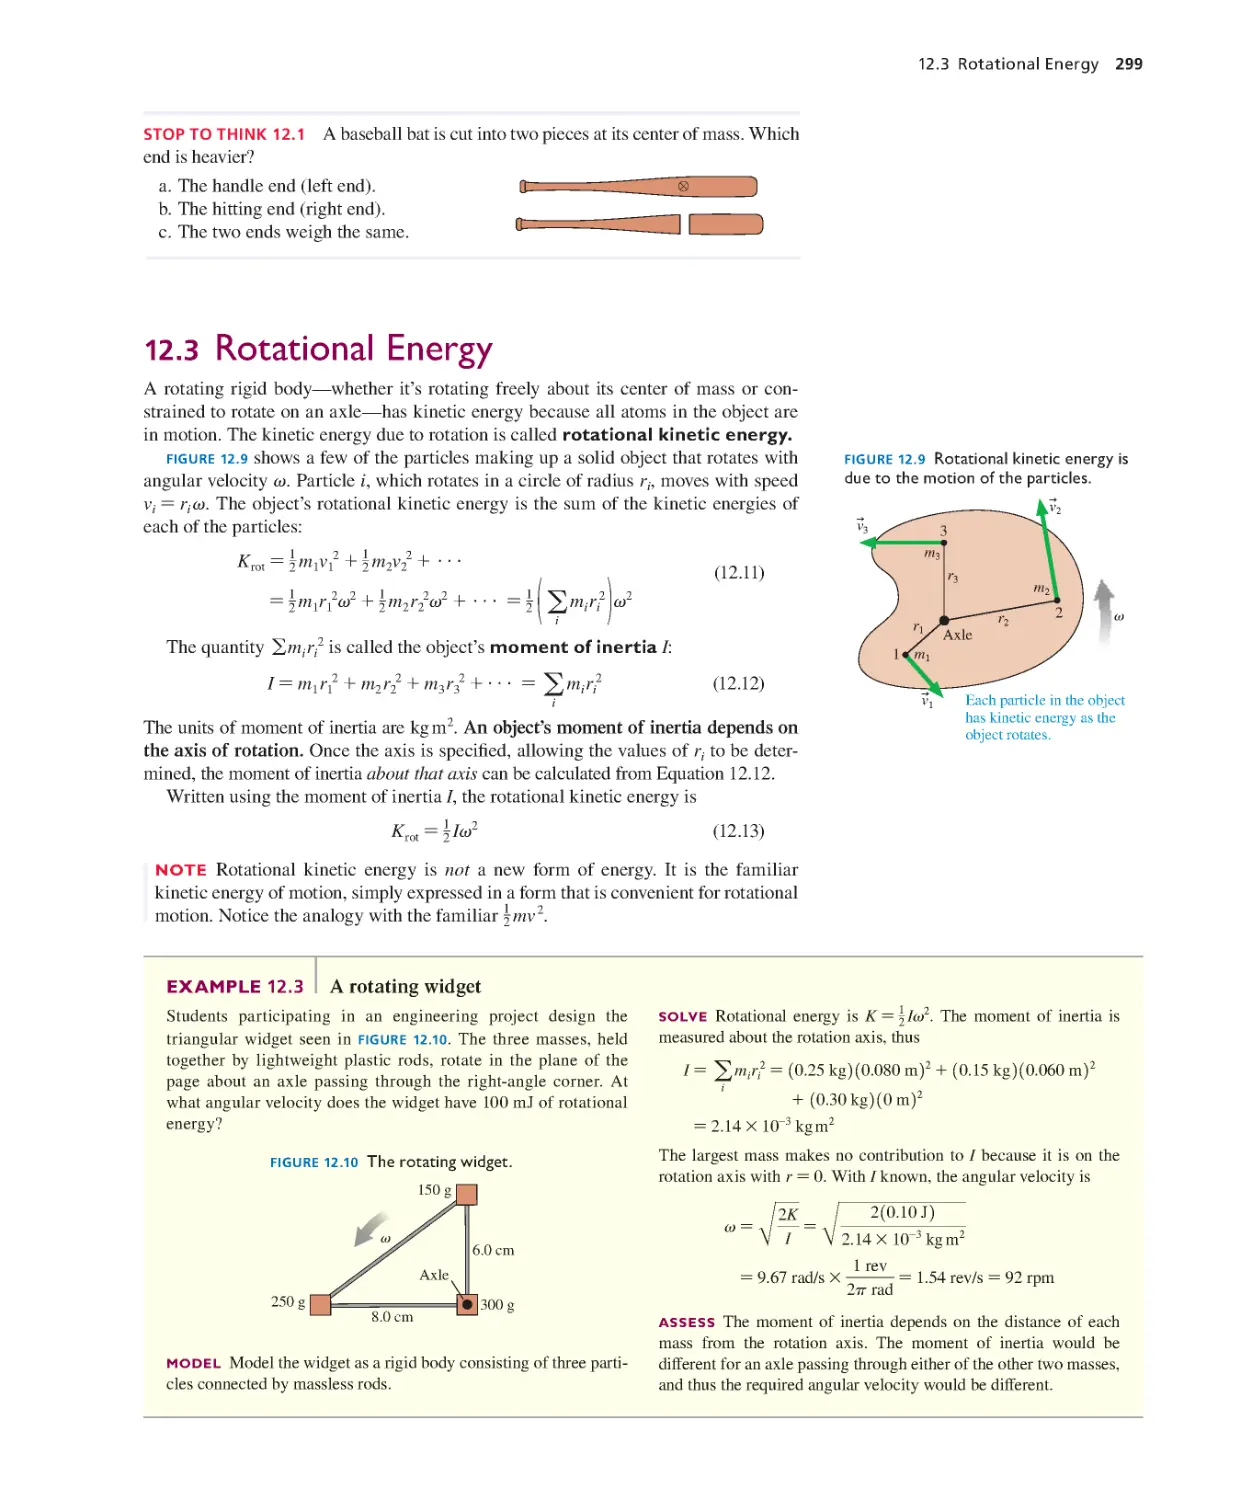 12.3. Rotational Energy